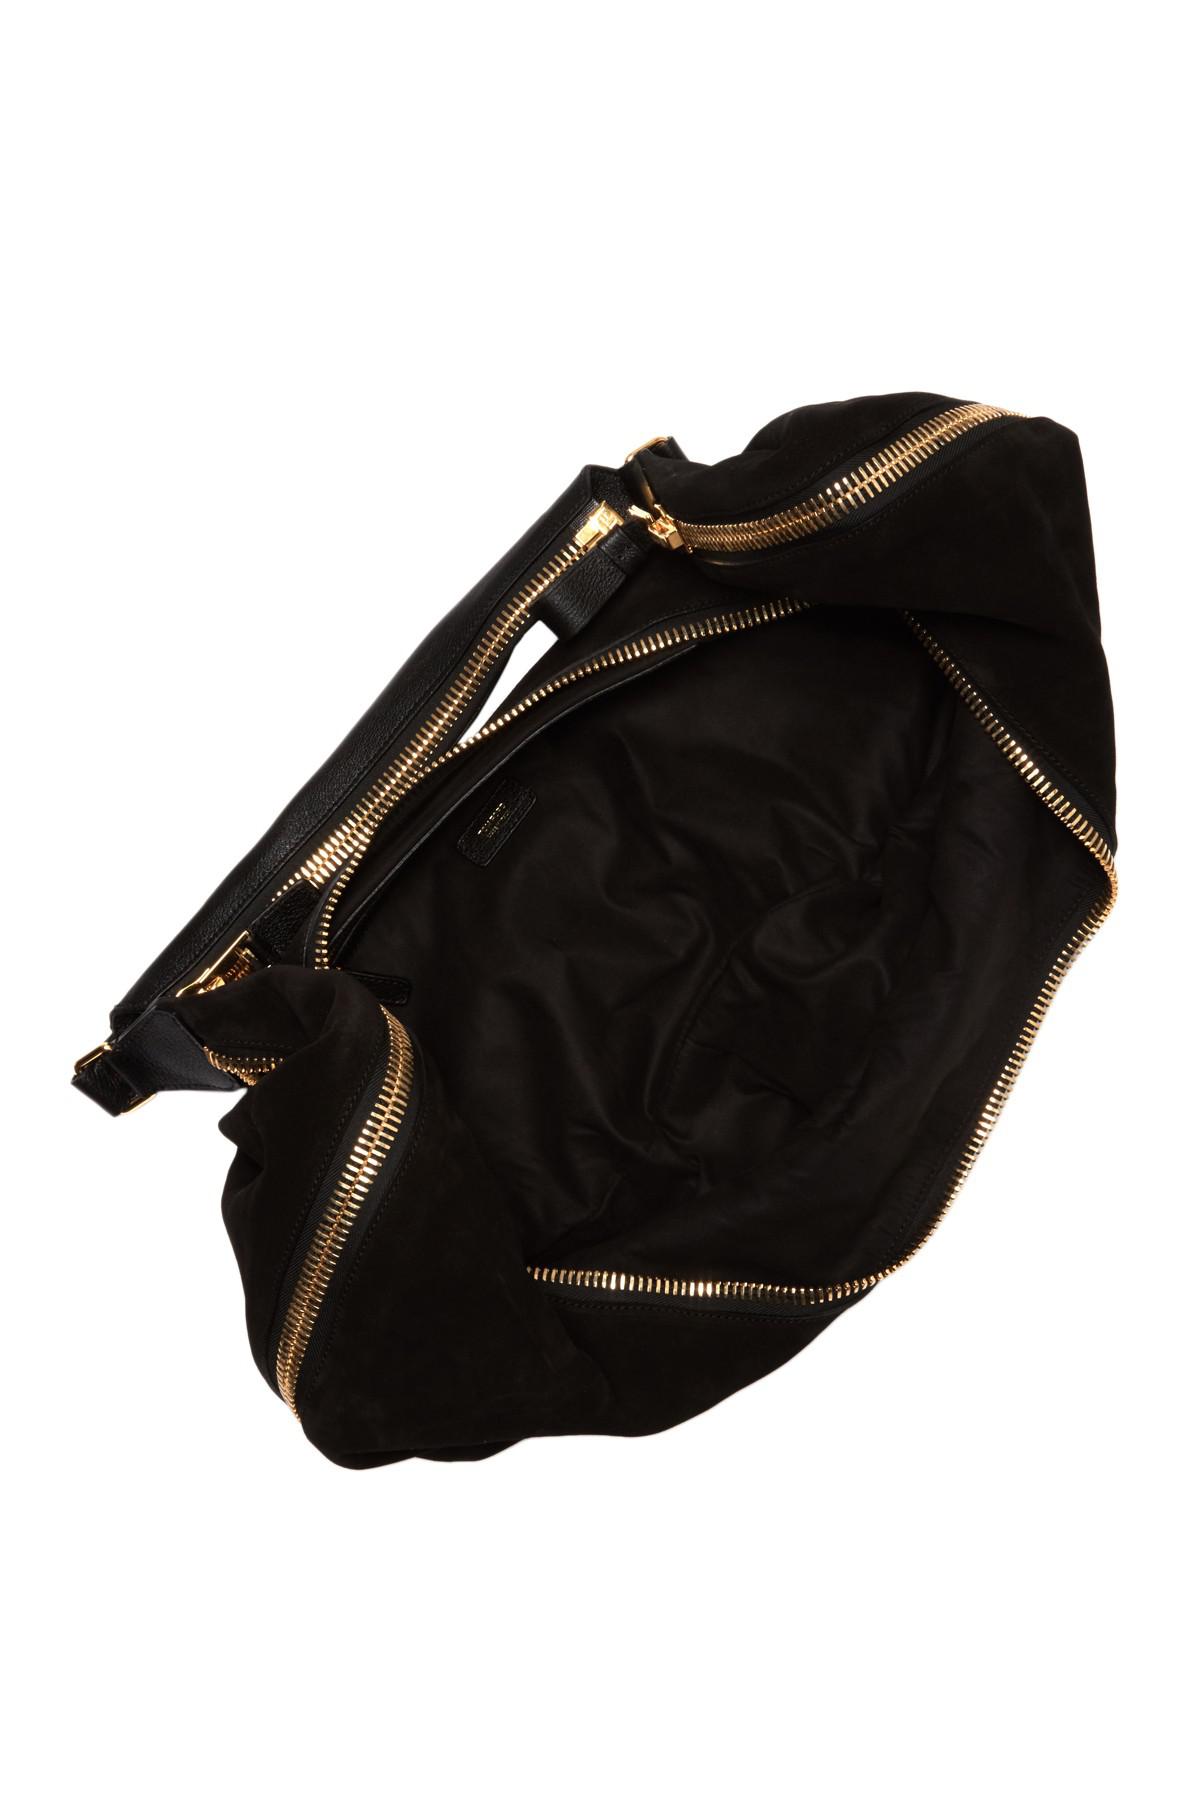 Tom Ford Oversized Suede Hobo Bag in Black | Lyst